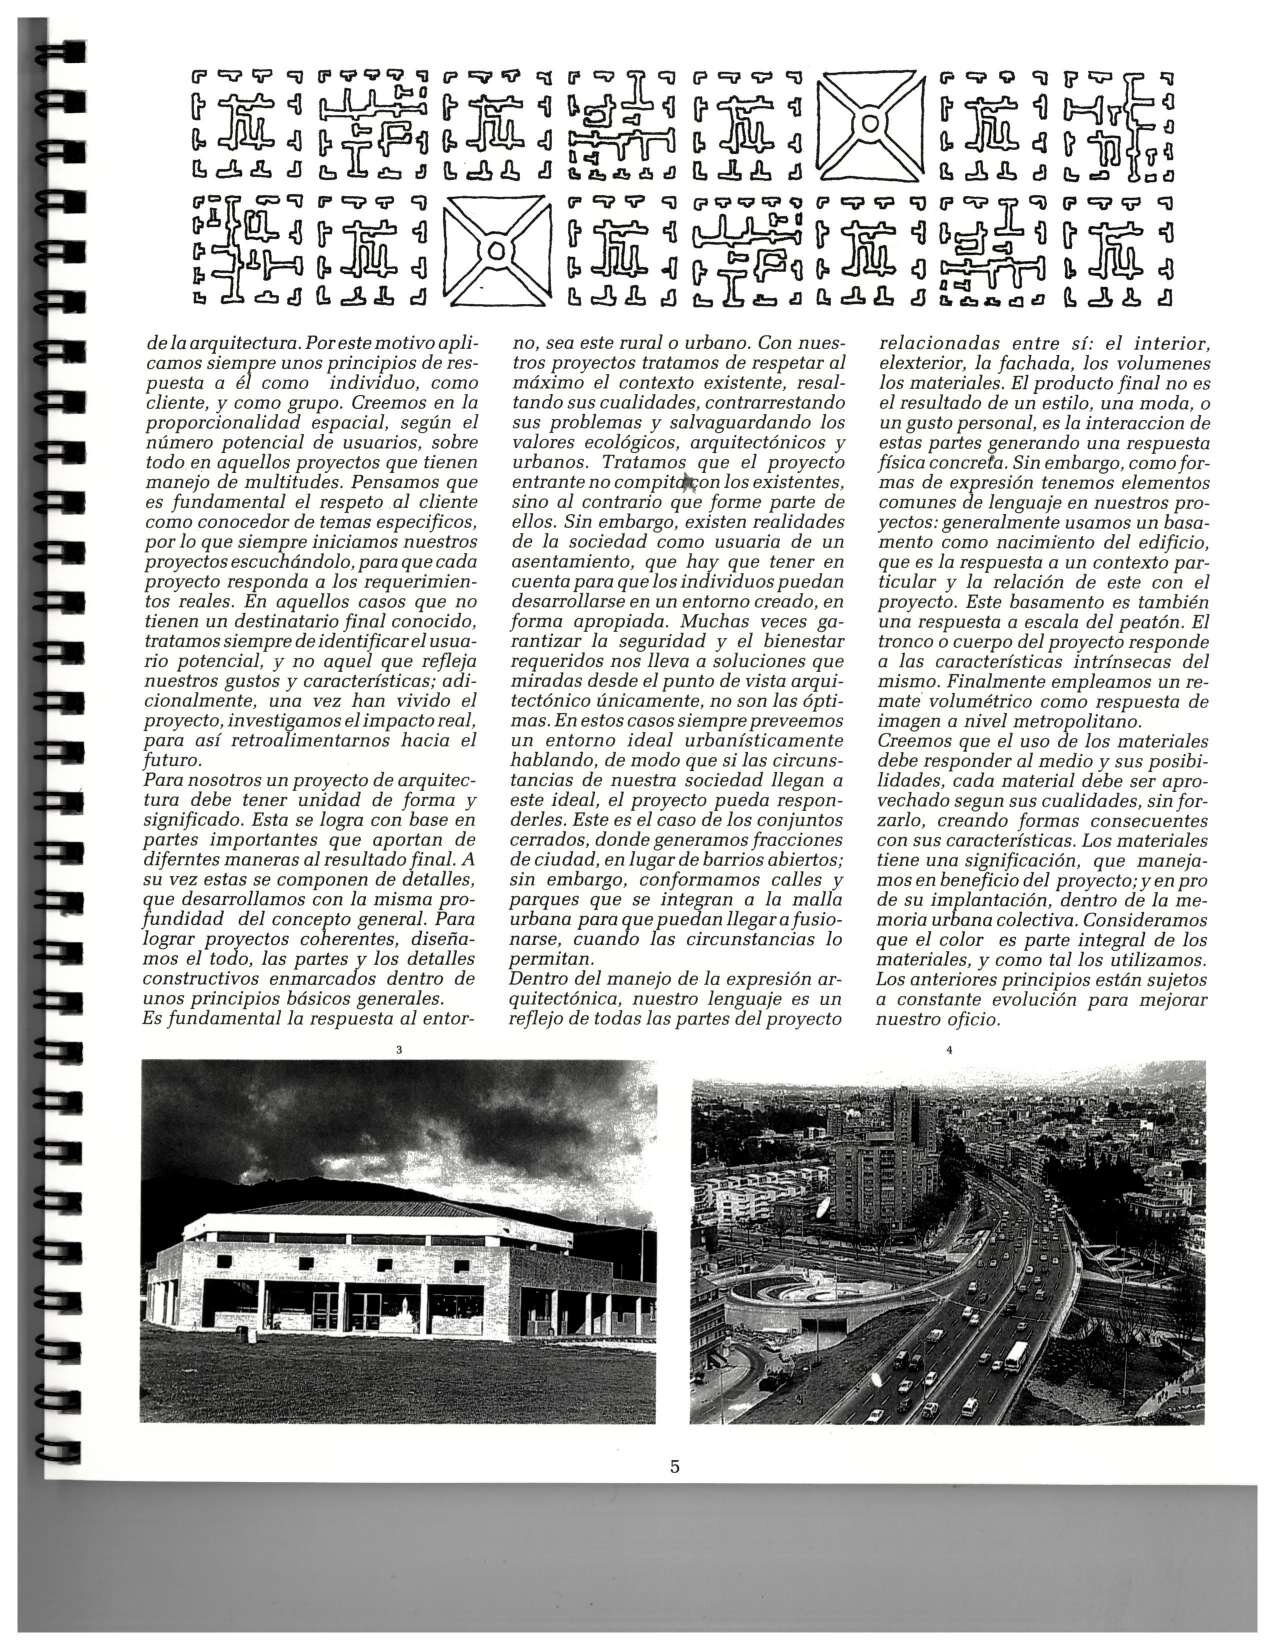 1995_Obra Contexto Urbano_Revista PROA_compressed_page-0005.jpg